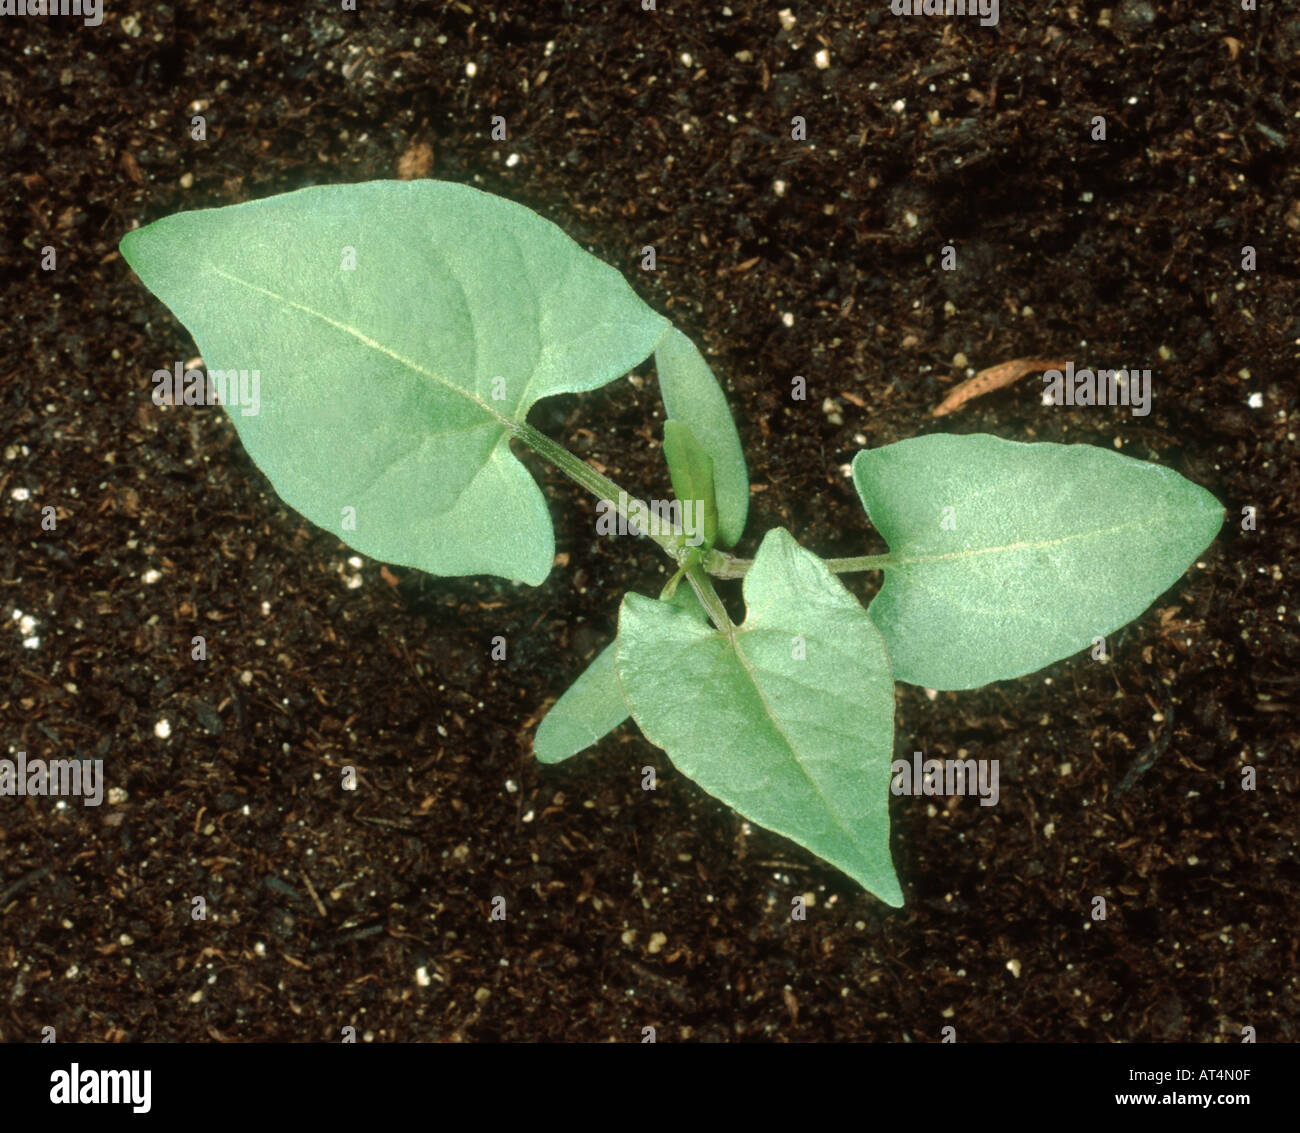 Black bindweed Bilderdykia convolvulus seedling with three true leaves Stock Photo